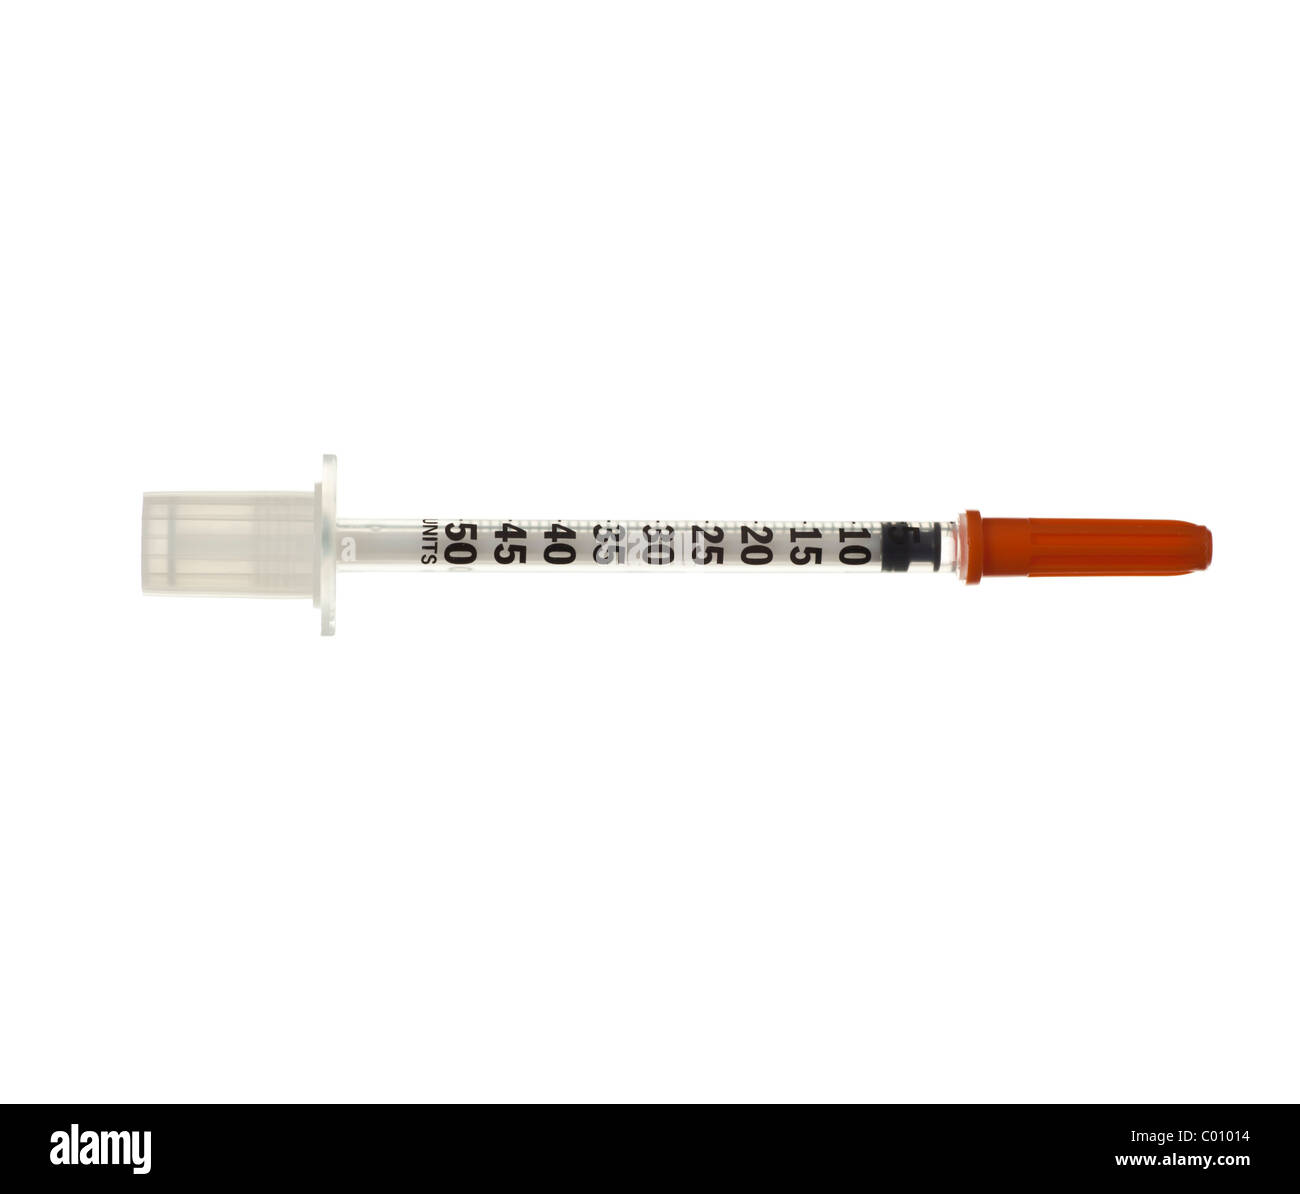 0,5 ml siringa da insulina Foto stock - Alamy